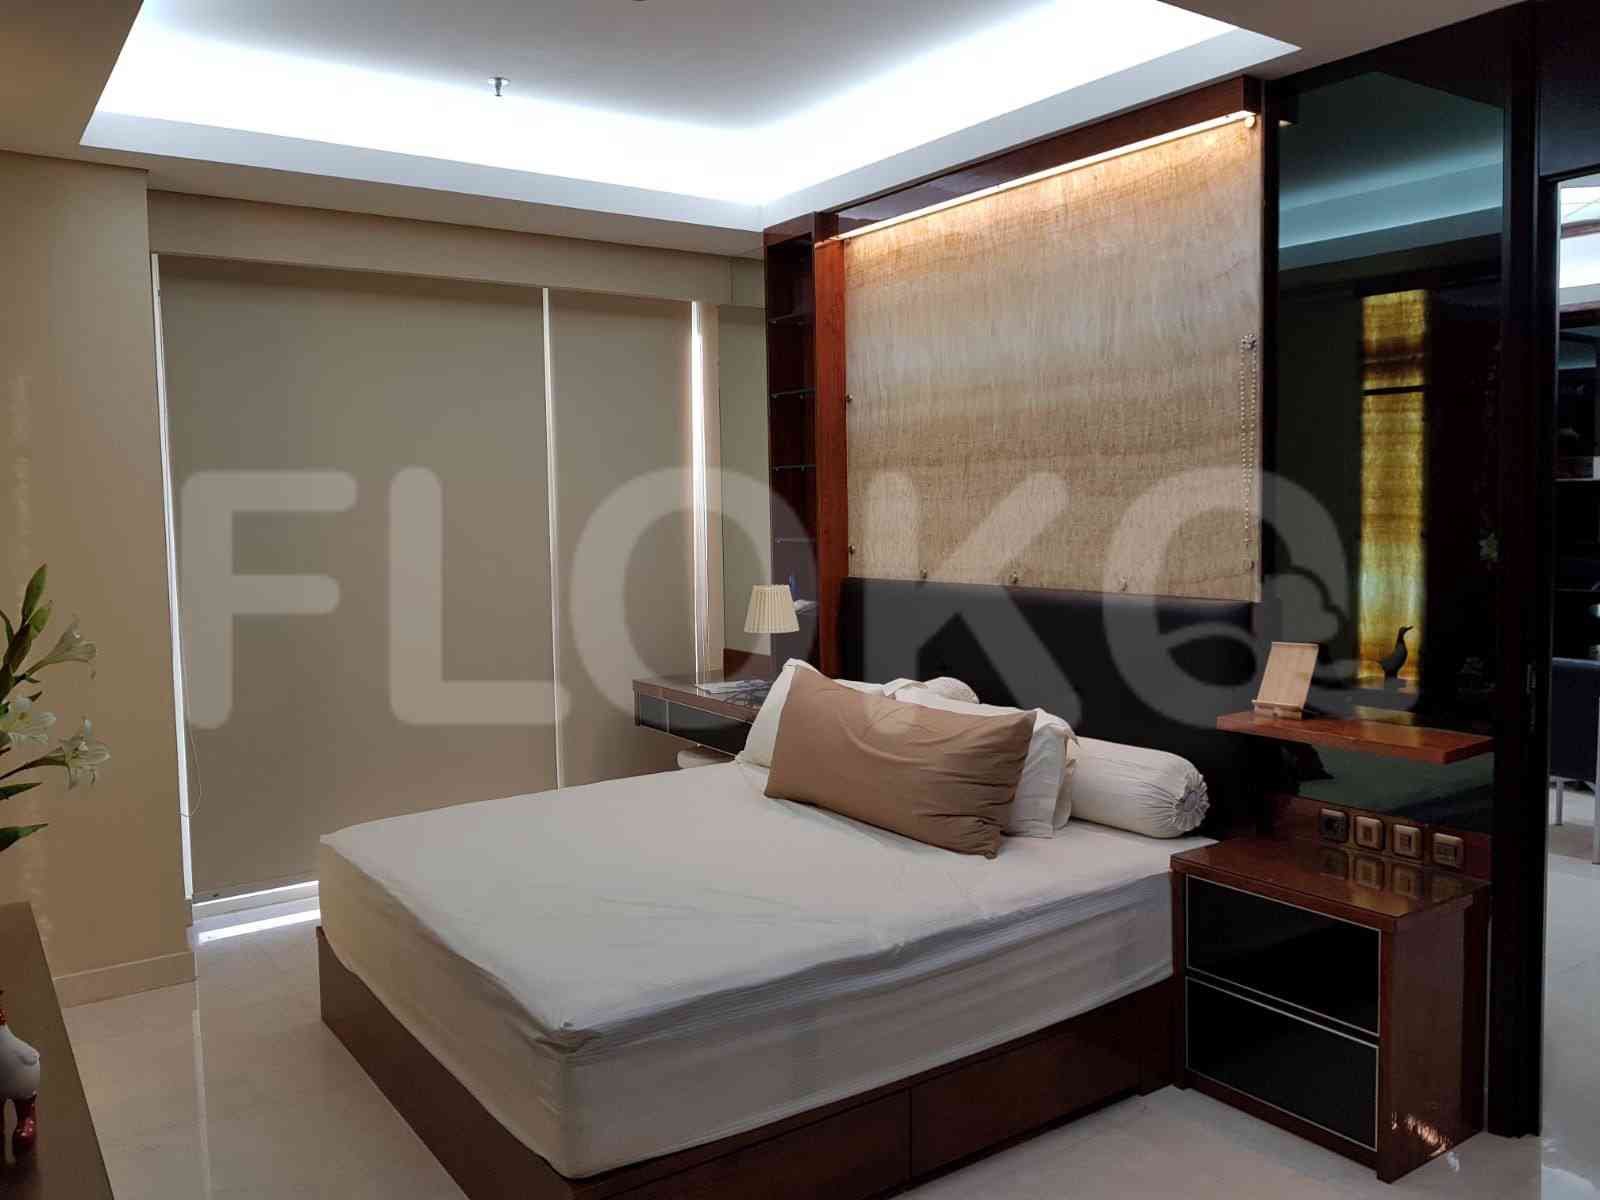 1 Bedroom on 16th Floor for Rent in Pondok Indah Residence - fpo995 2